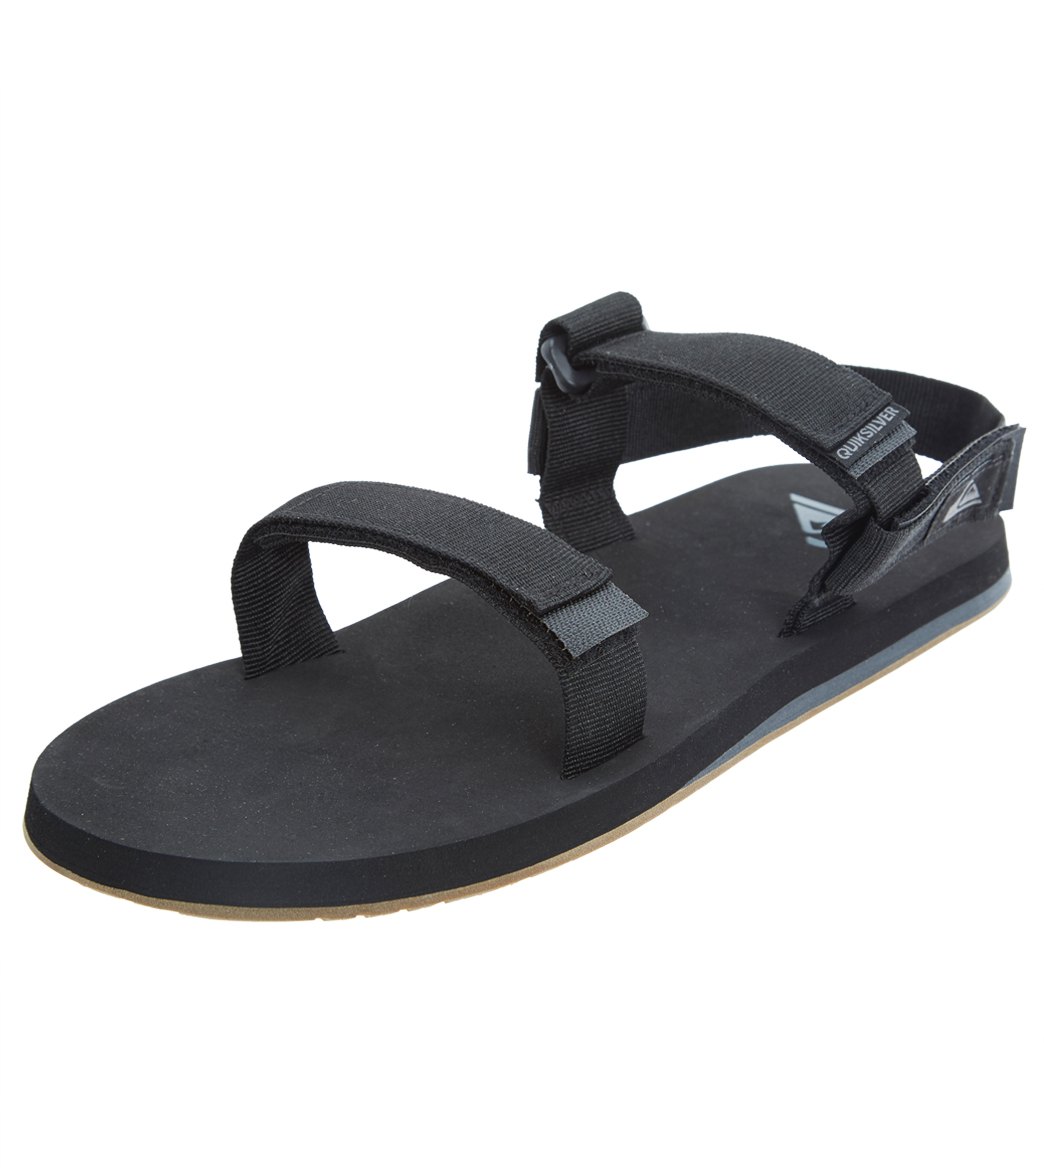 Quiksilver Monkey Caged Adjustable Sandals - Black/Grey/Brown 1346 - Swimoutlet.com